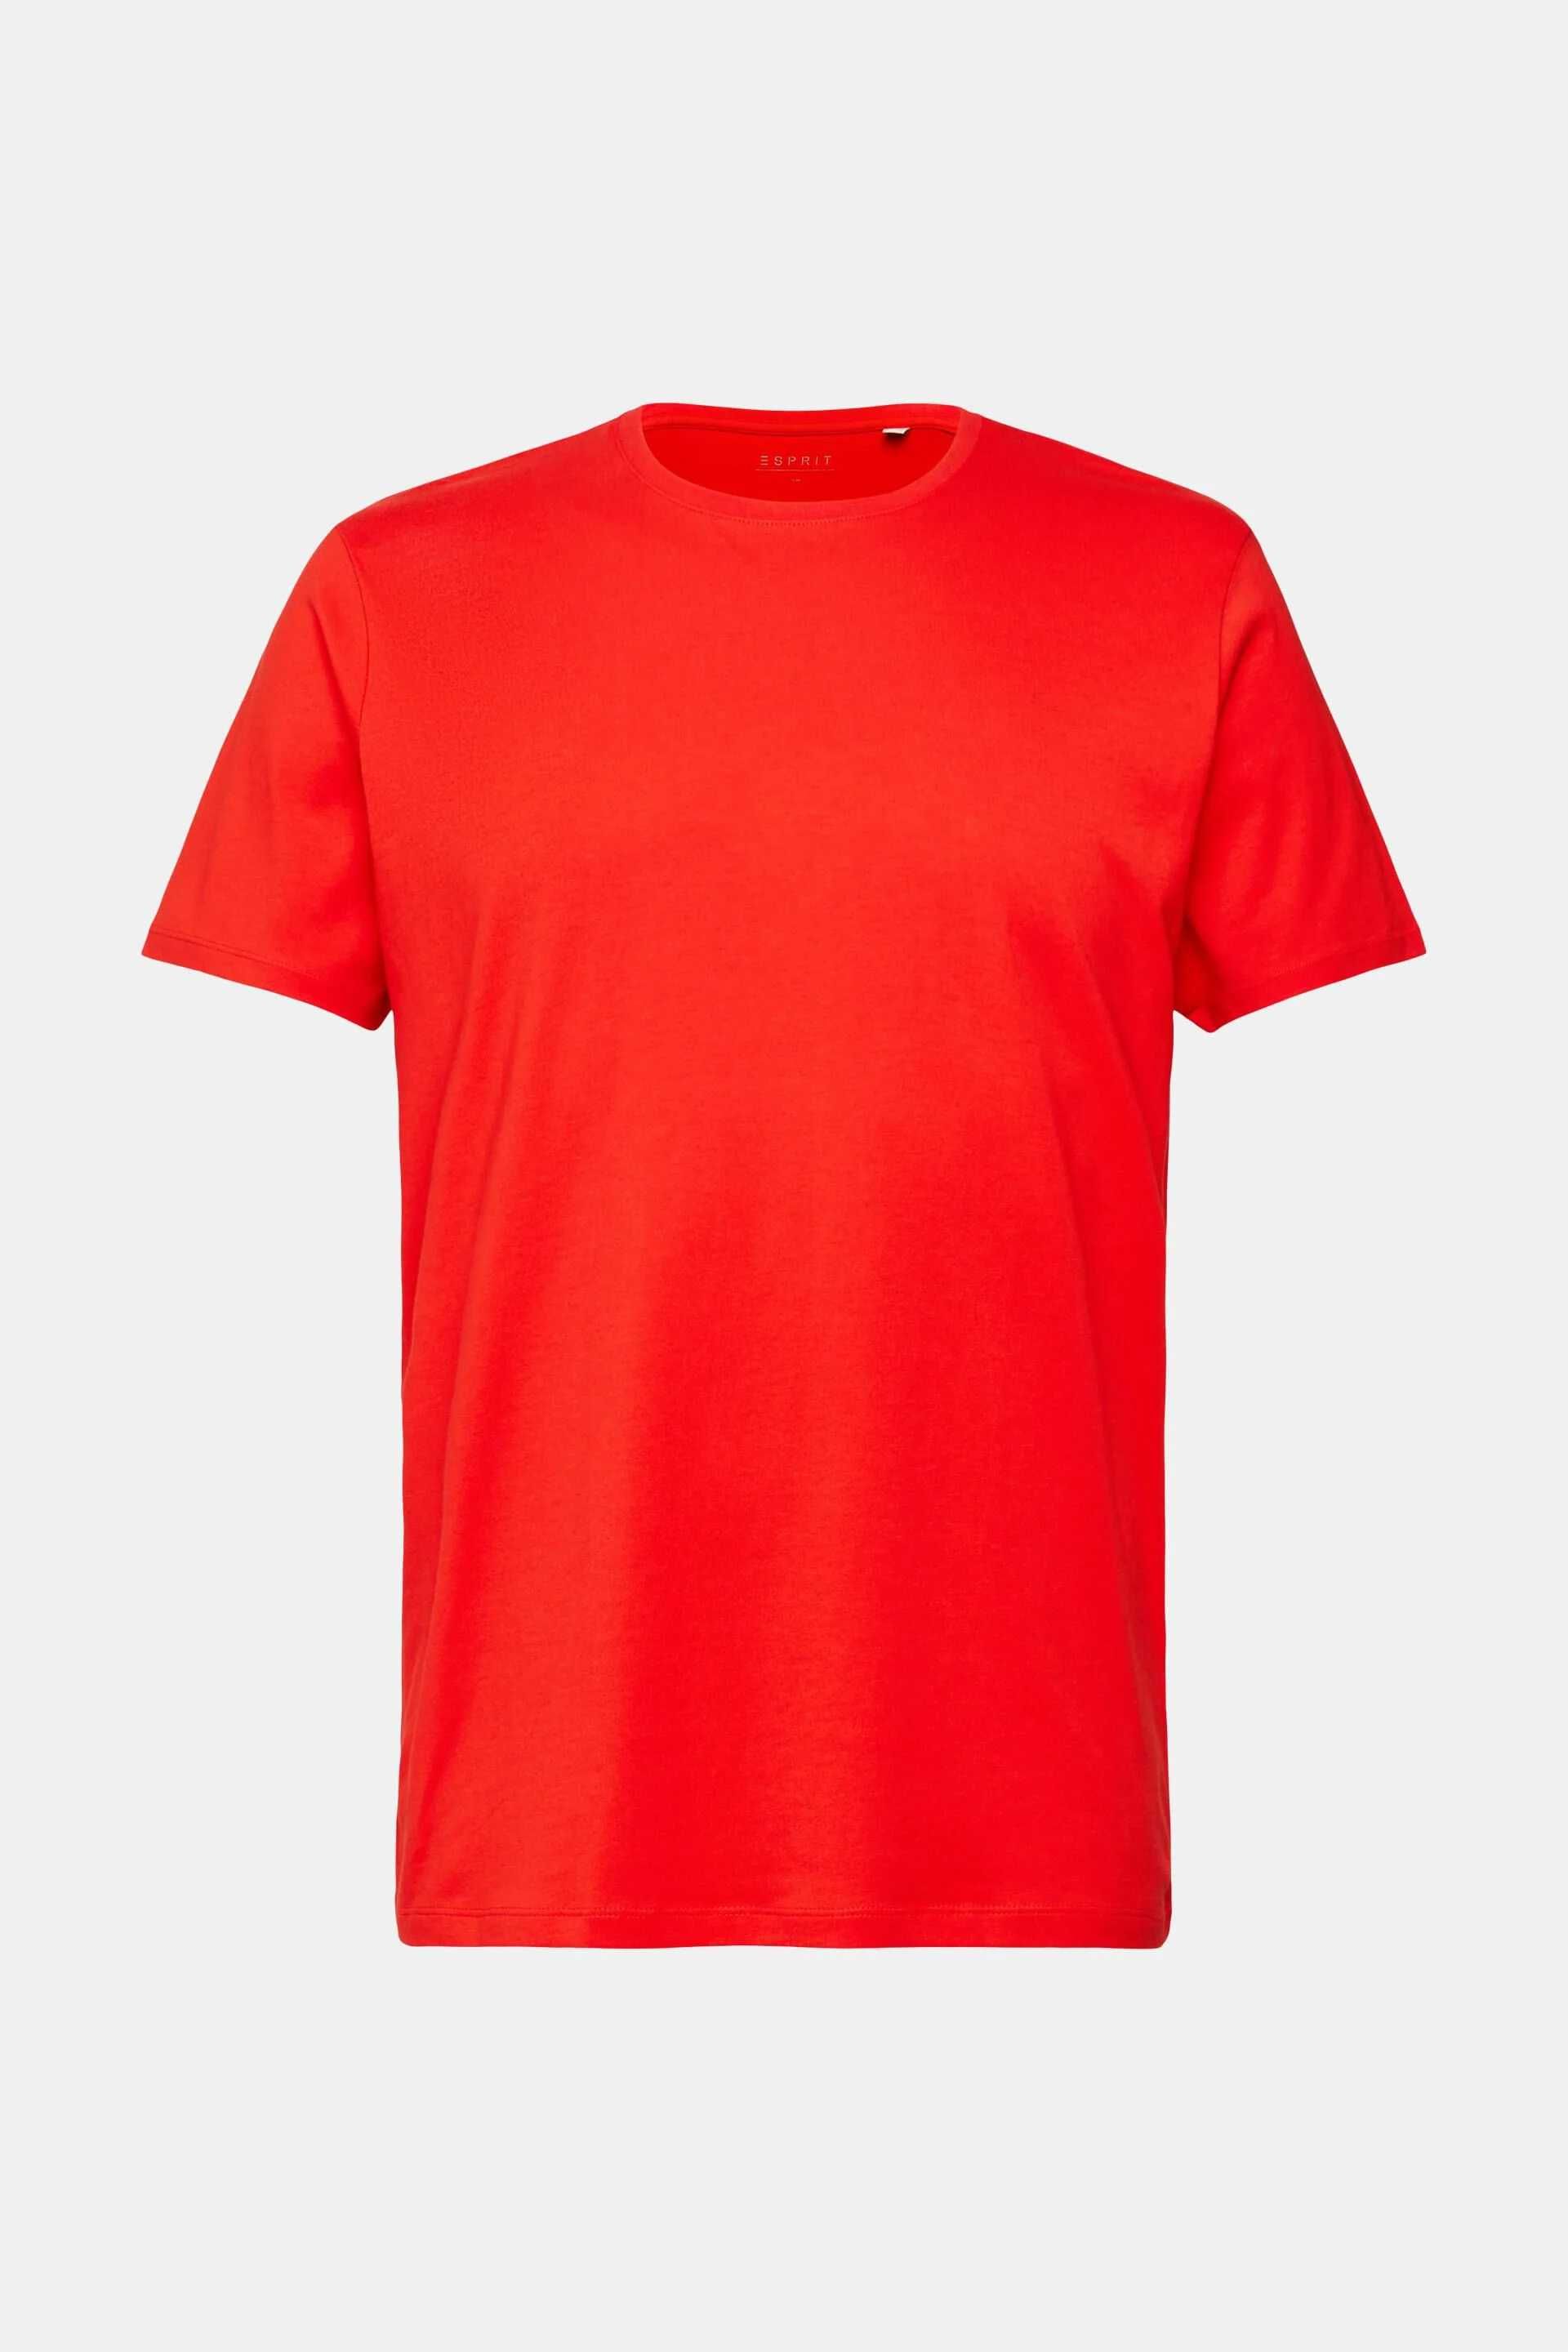 Koszulka T-shirt Esprit L Męska Czerwona